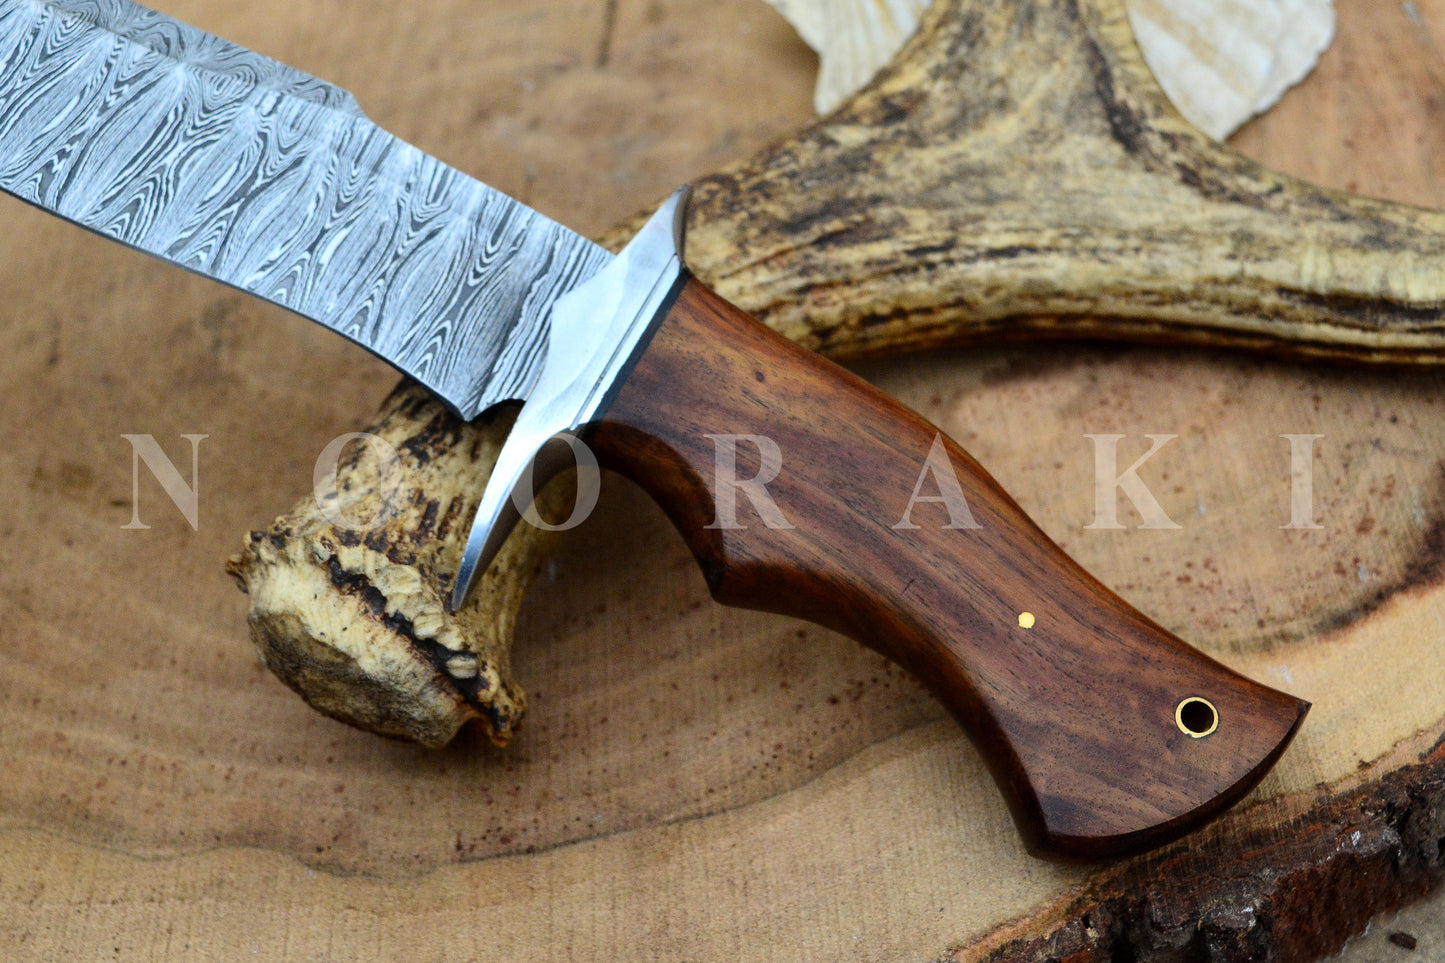 Handmade Damascus Steel Fixed Blade Hunting Knife, Multipurpose 12" with Sheath